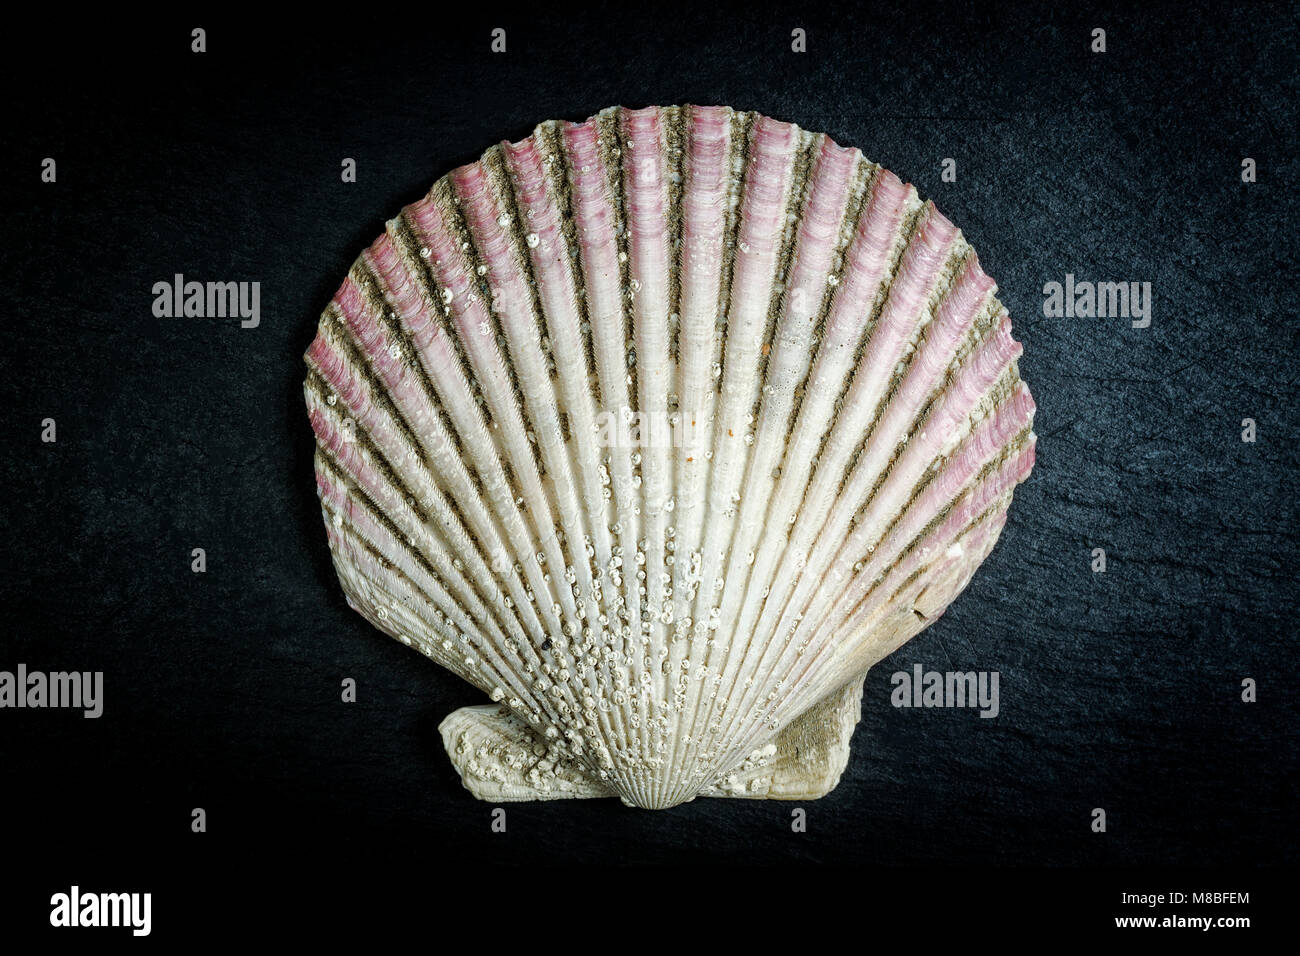 Scallop shell (Pecten maximus) on dark background. Florianopolis, Santa Catarina, Brazil. Stock Photo